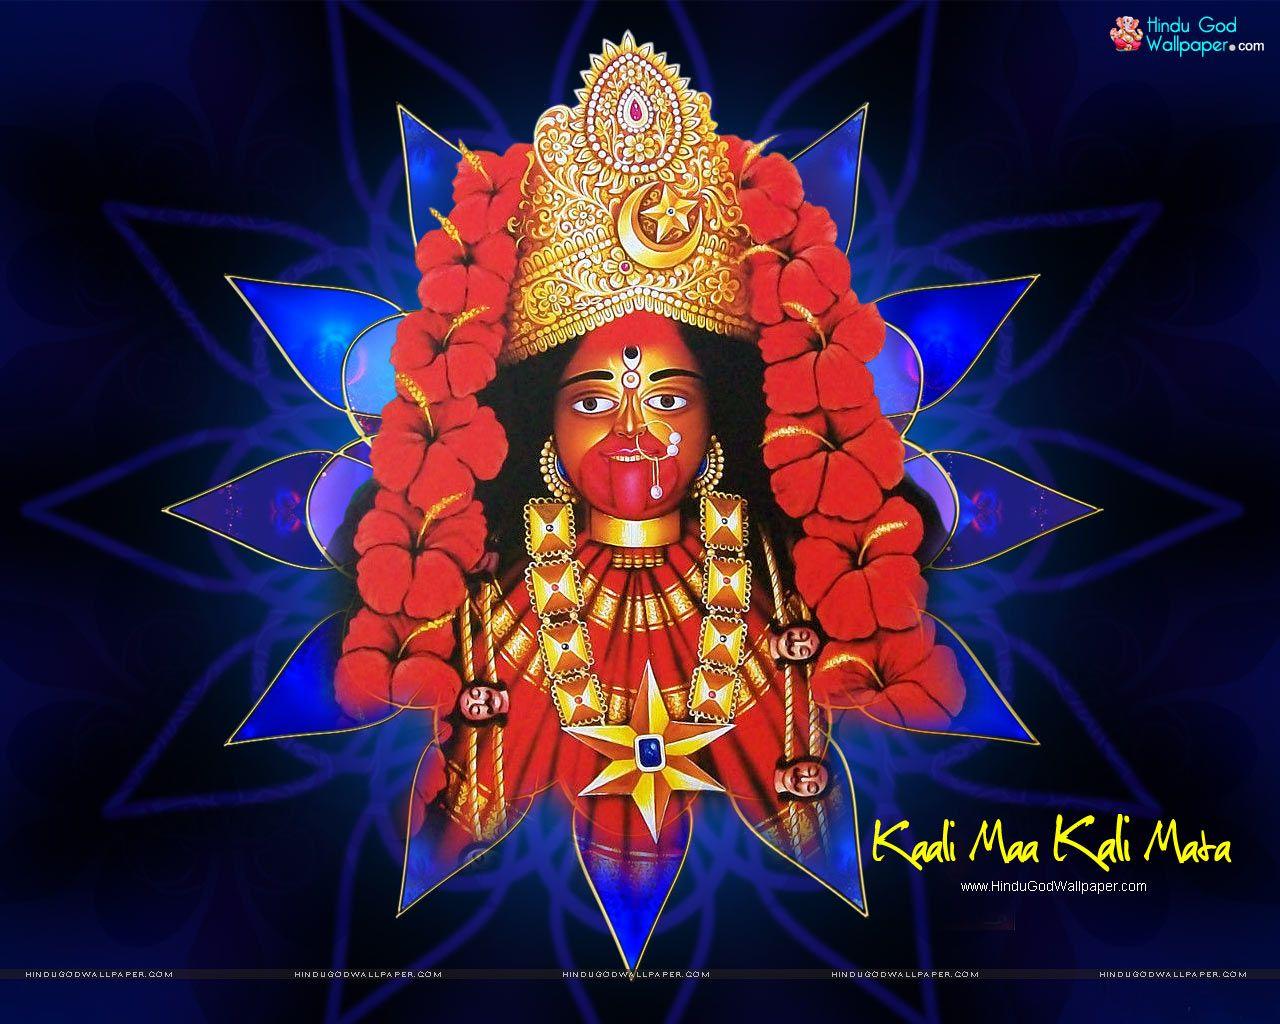 Mahakali Wallpaper Free Download. Wallpaper free download, Wallpaper, Kali picture